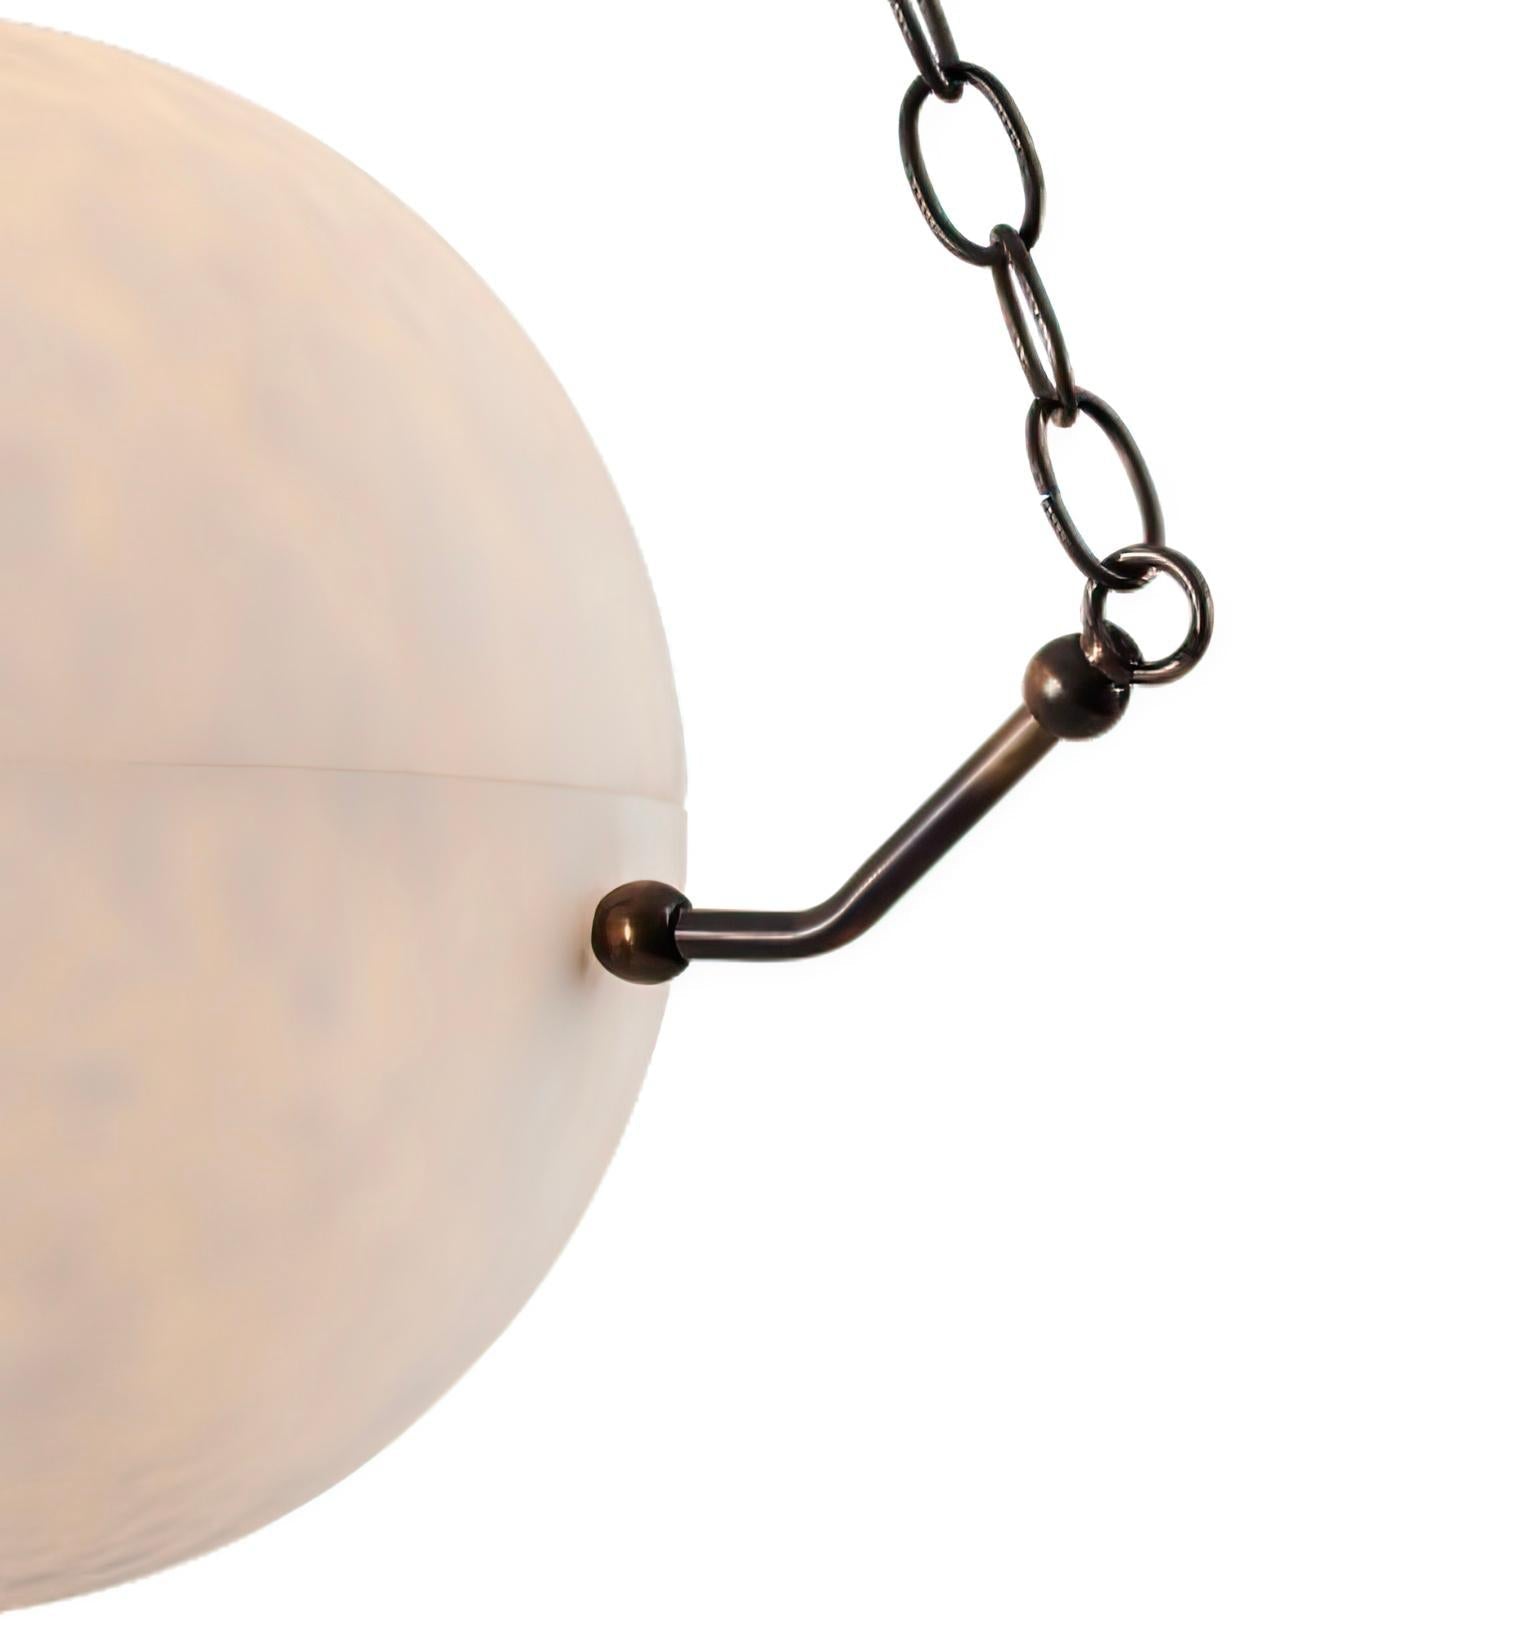 Alabaster Sphere Suspension Lamp, Pendant Kitchen Island Lamp